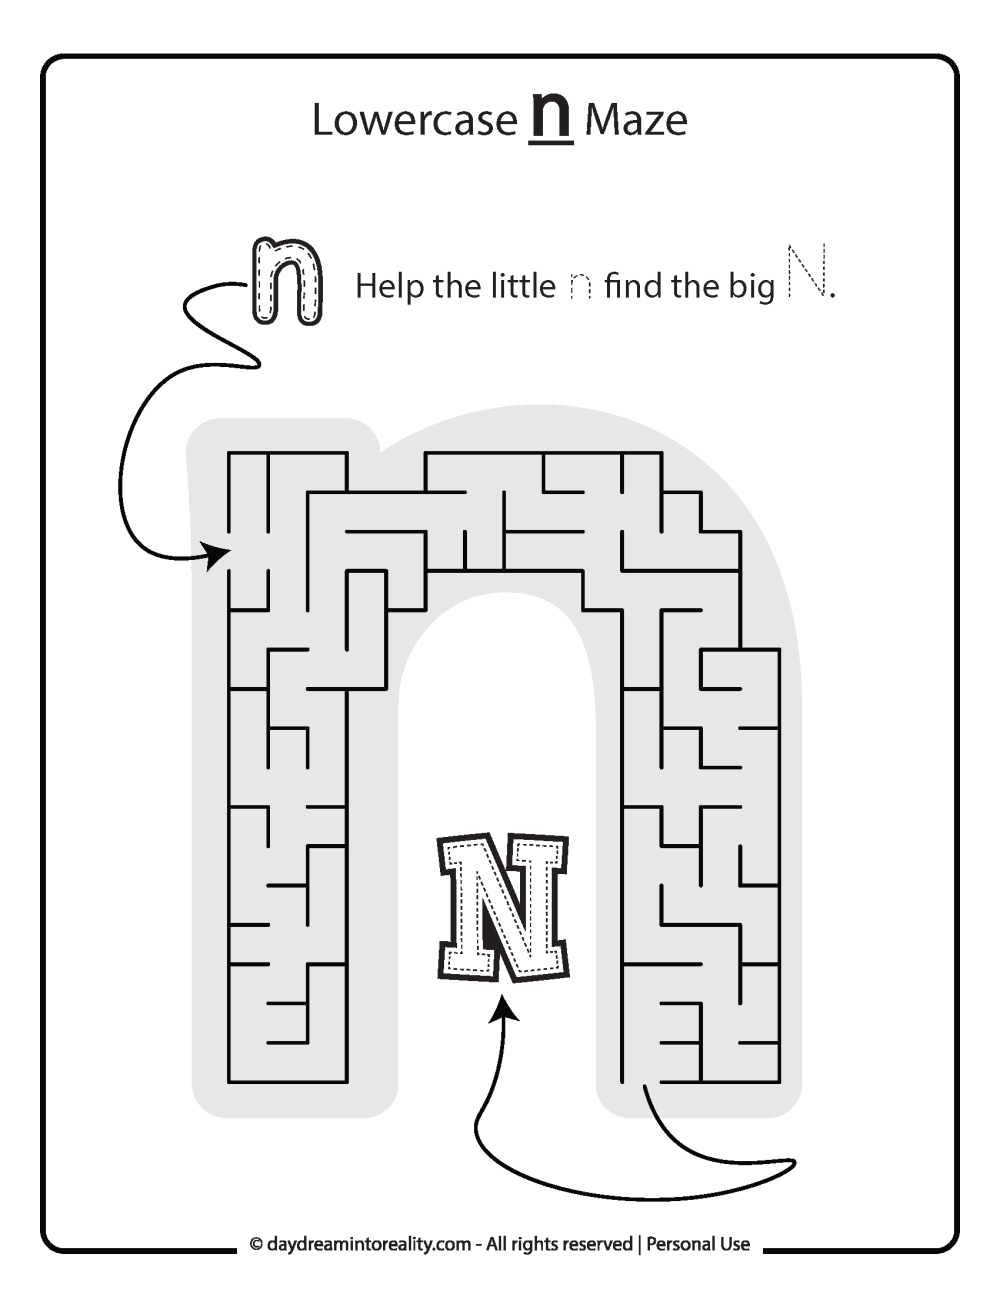 Lowercase "n" Maze Free Printable